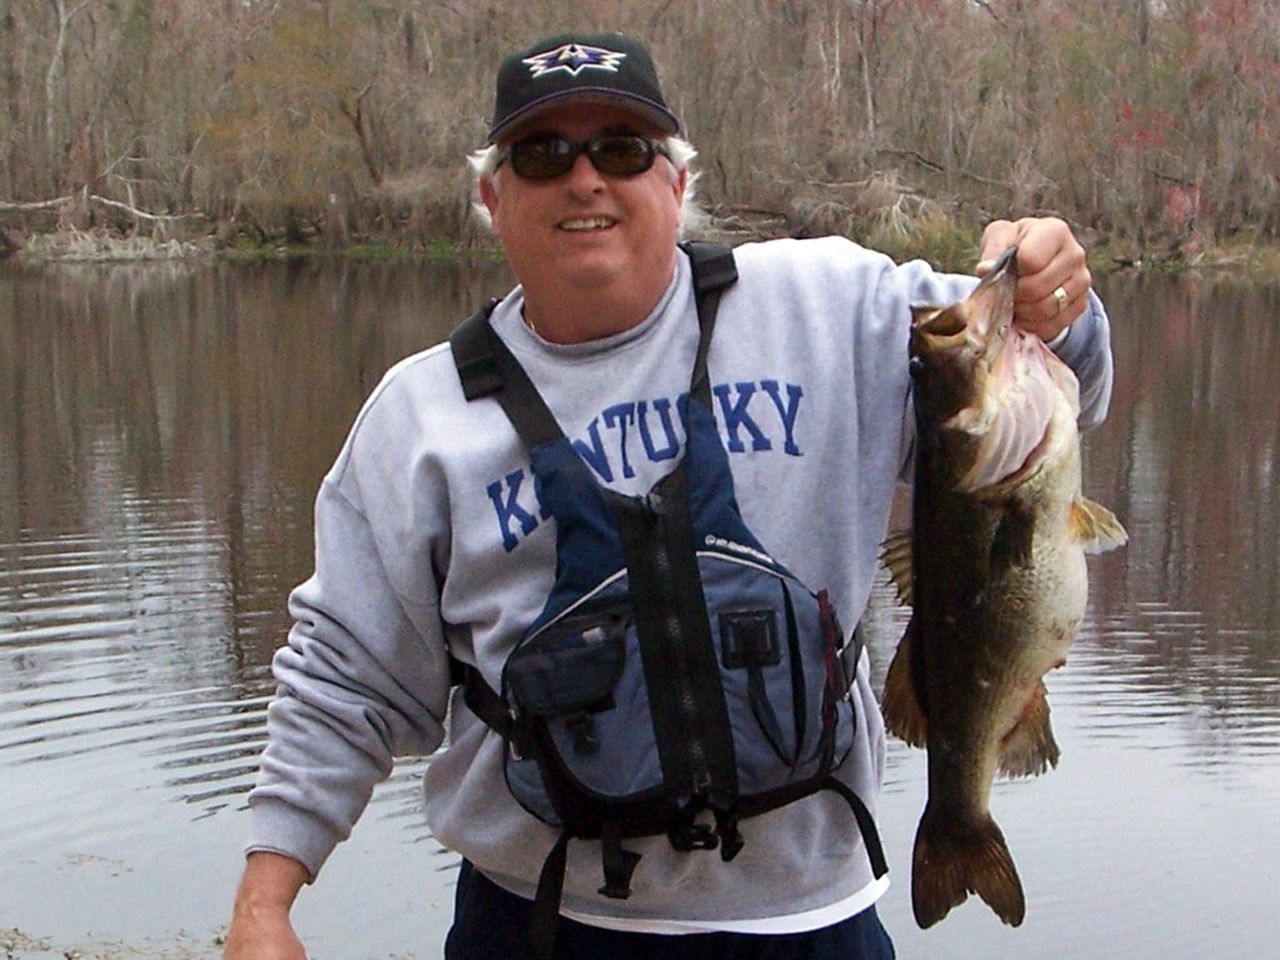 a man wearing a kentucky shirt is holding two fish